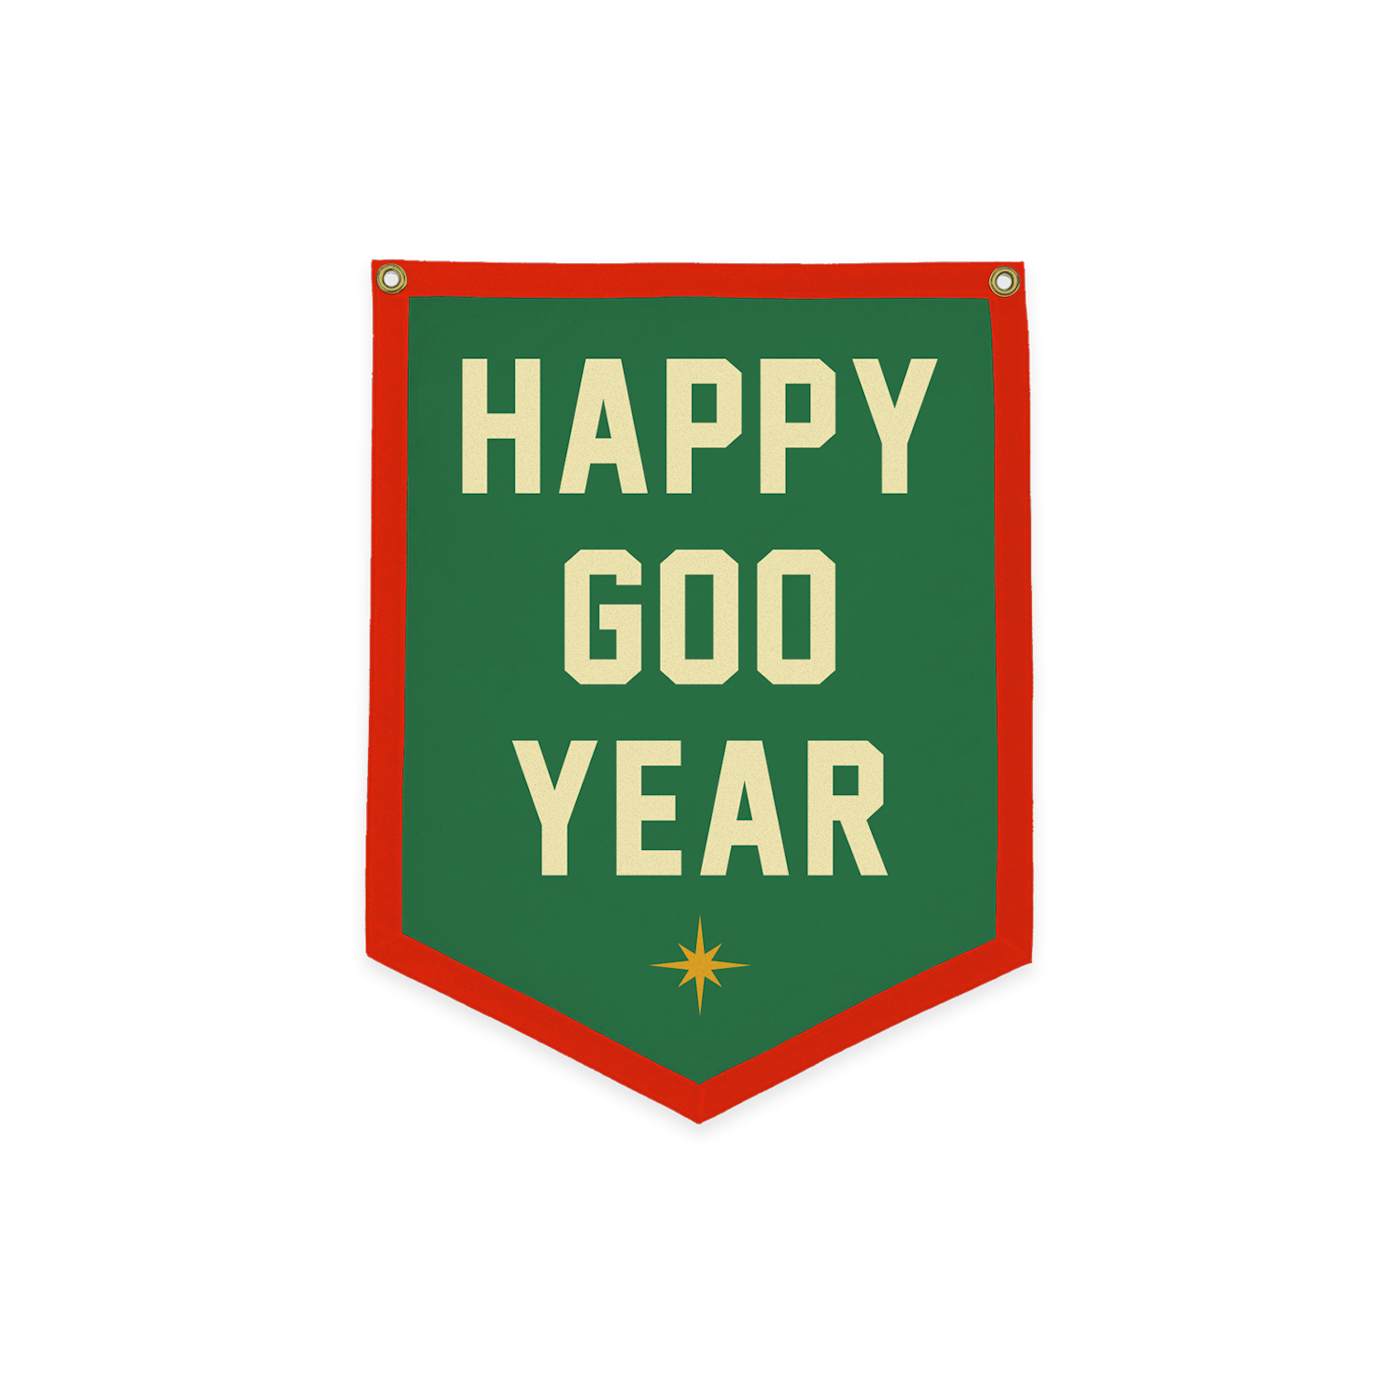 The Goo Goo Dolls Happy Goo Year Camp Flag